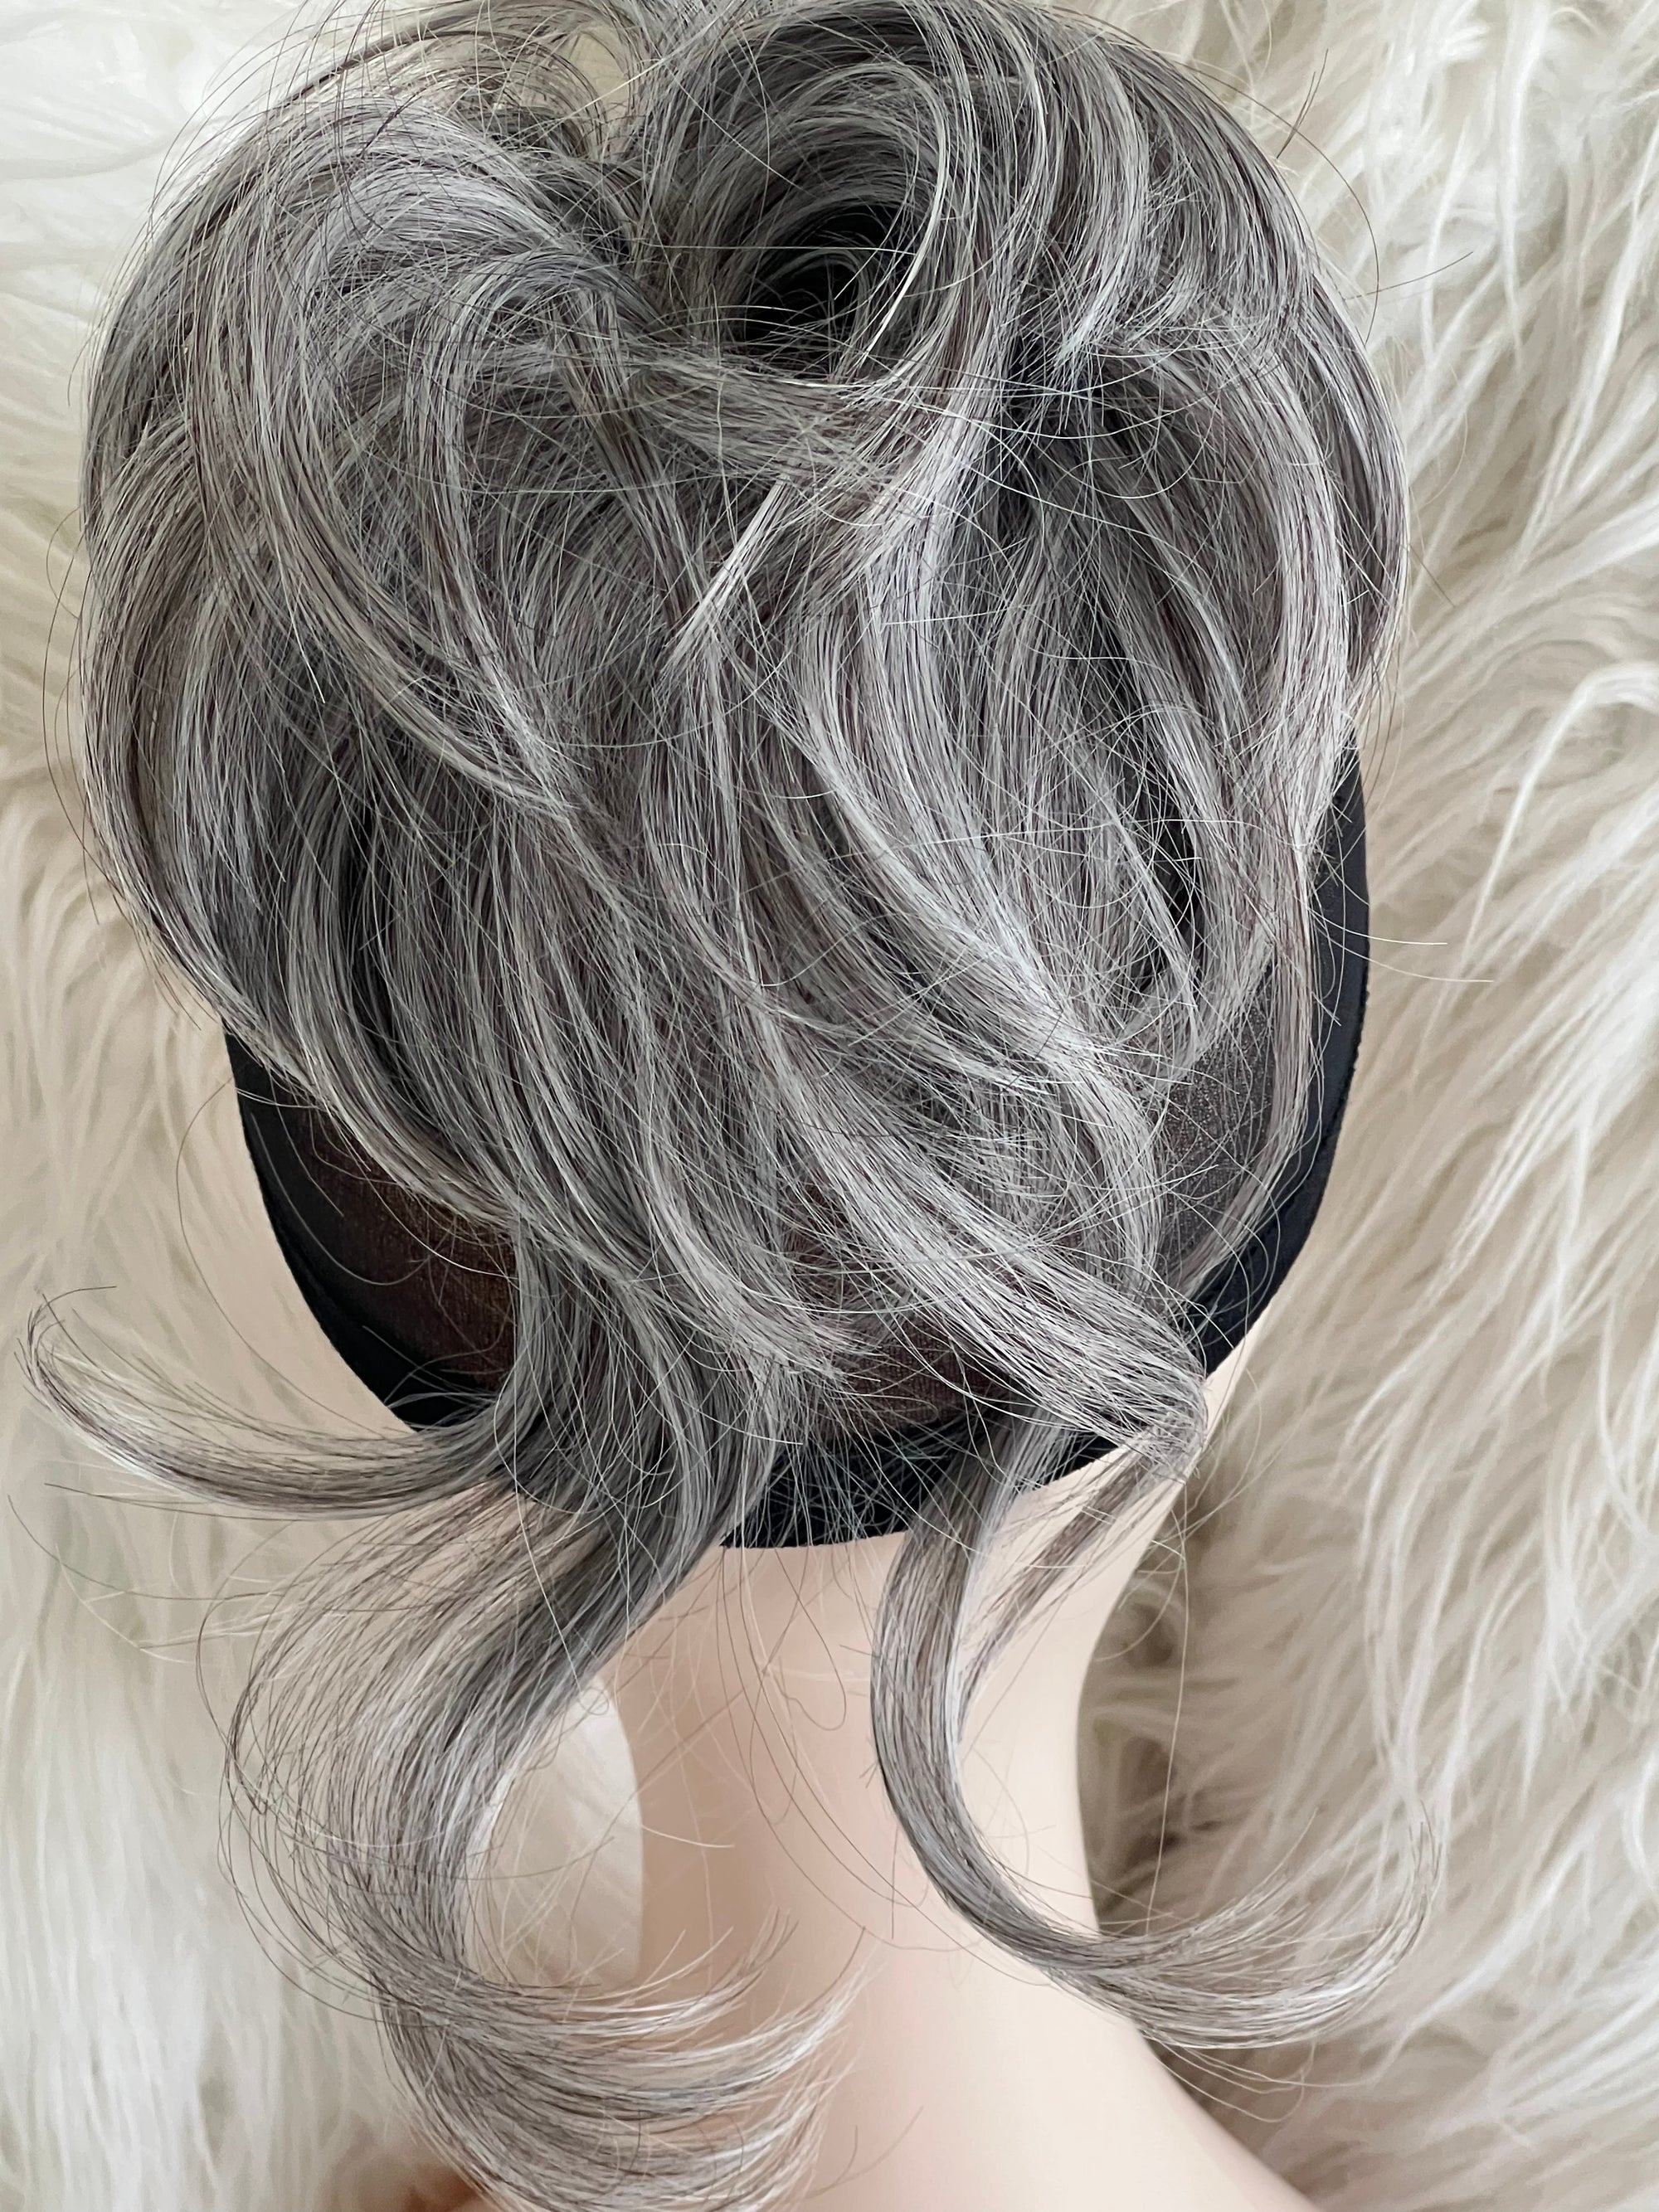 Tillstyle hairbun scrunchie with straight hair bangs hair piece grey with mixed white hair